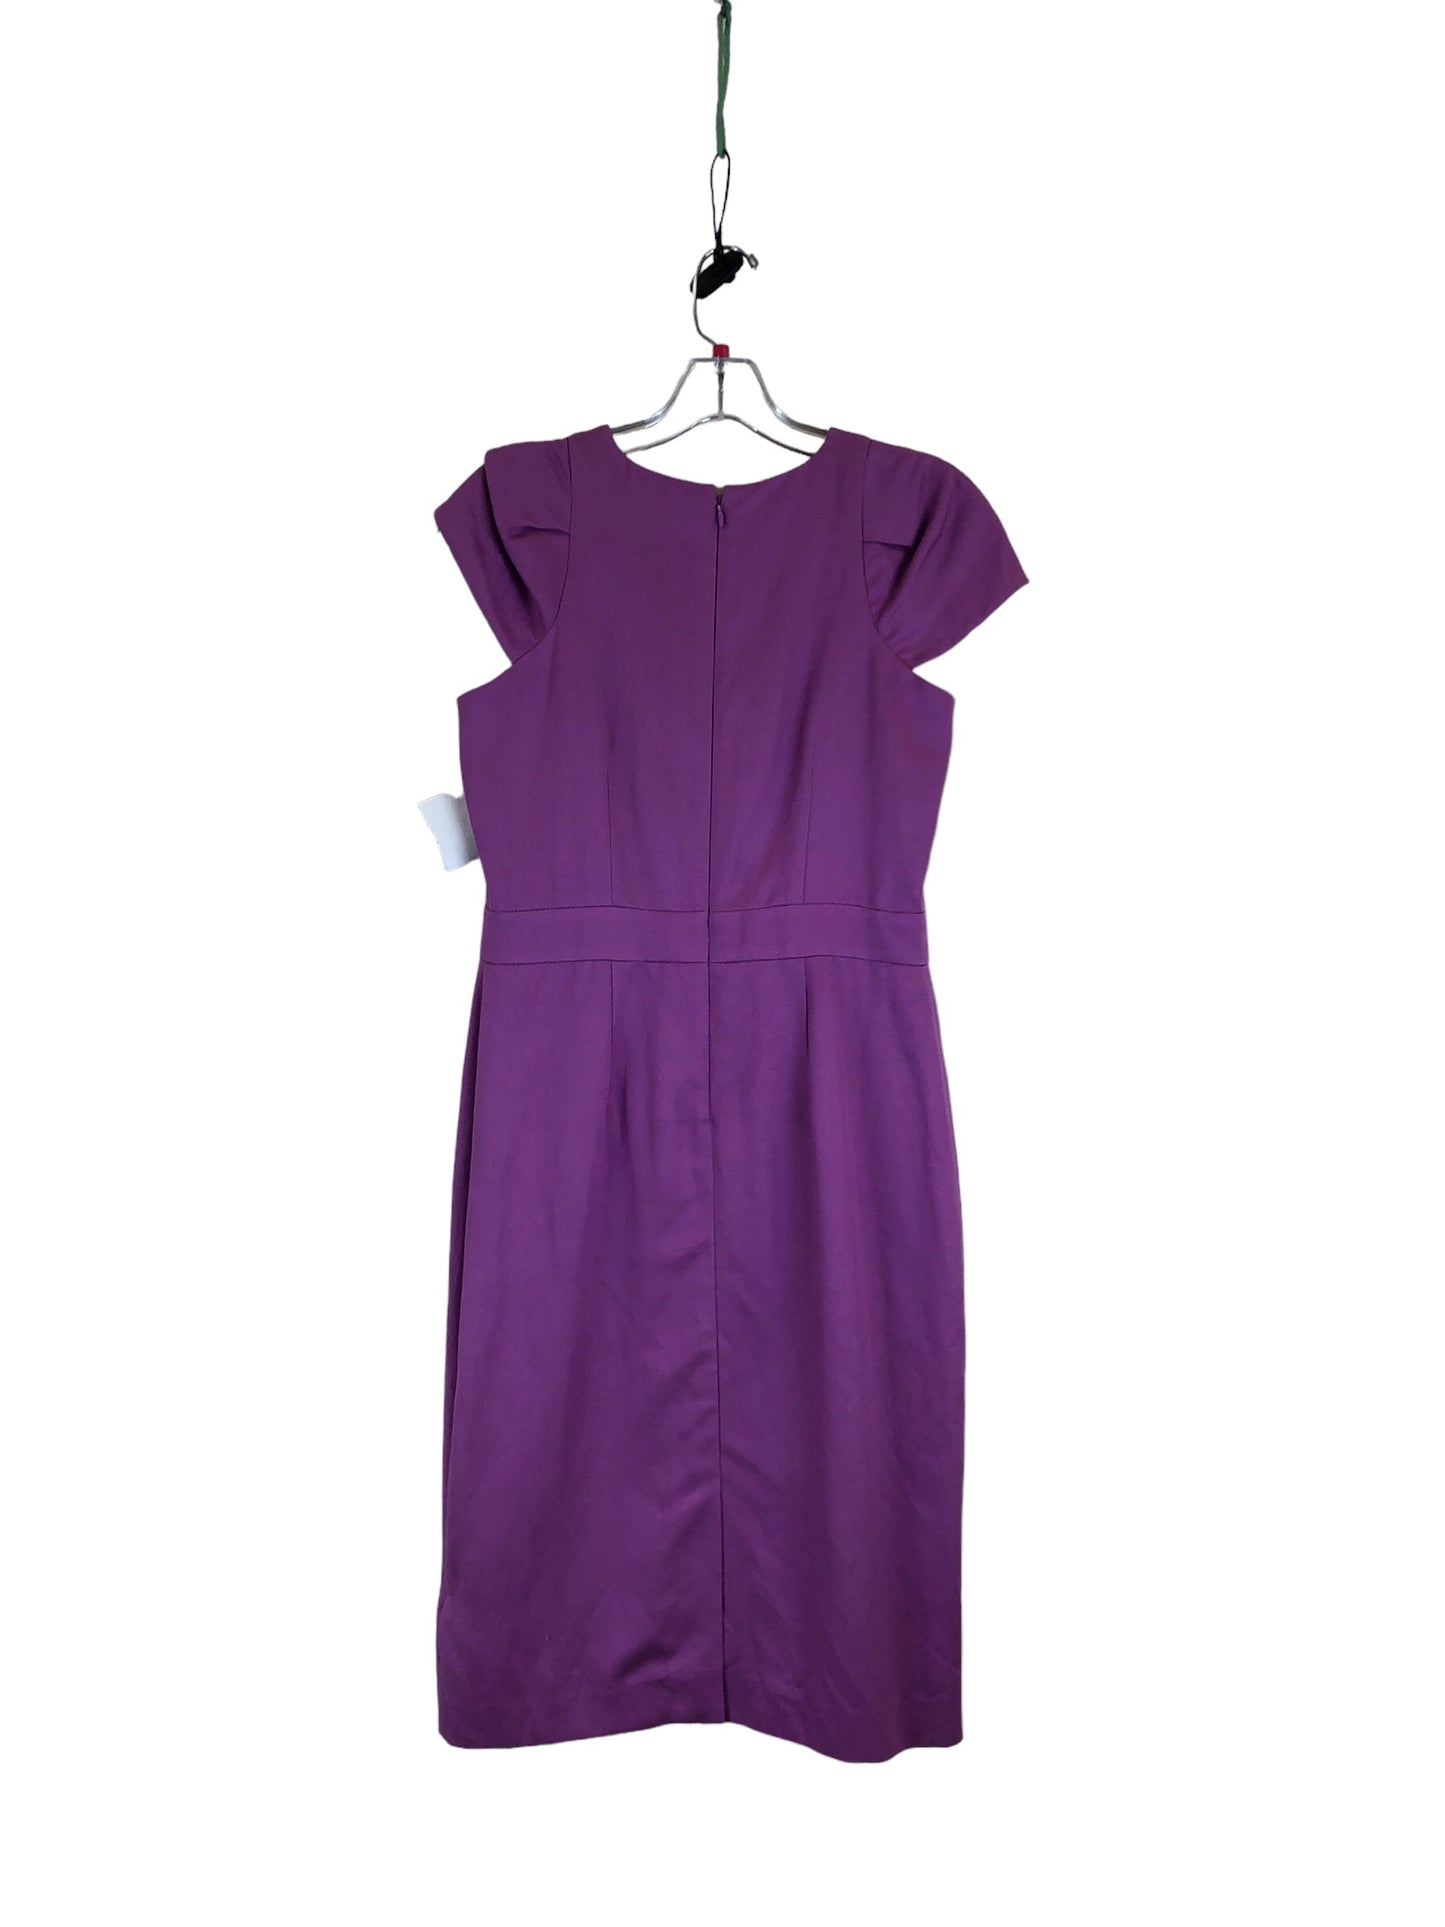 Pink & Purple Dress Casual Short Ann Taylor, Size Xxs